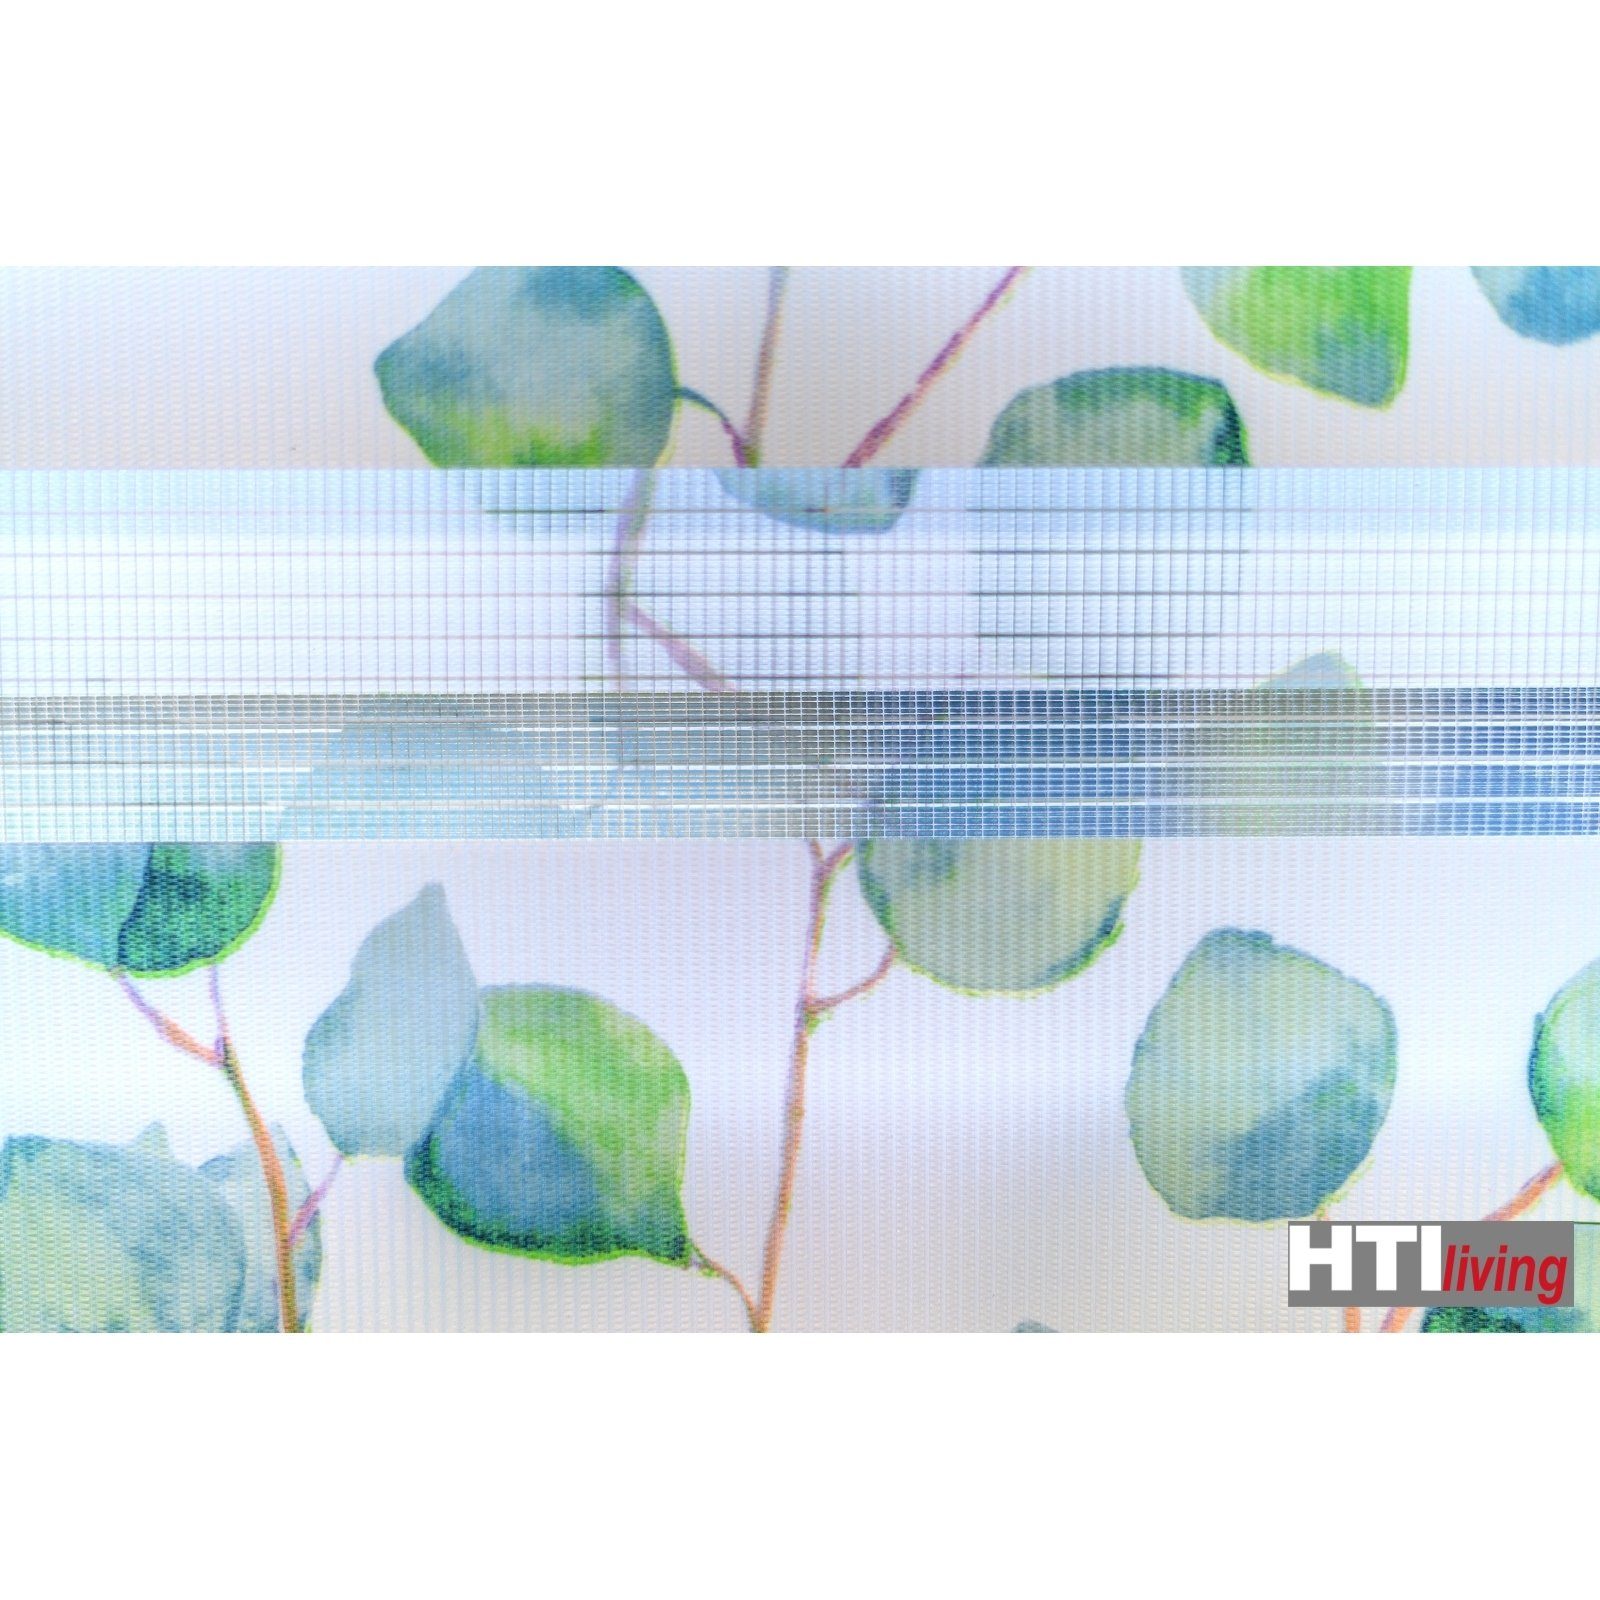 Leaf halbtransparent, Klemmfix ohne 150 60 Doppelrollo HTI-Living, gemustert Bohren, Marisol, Doppelrollo x